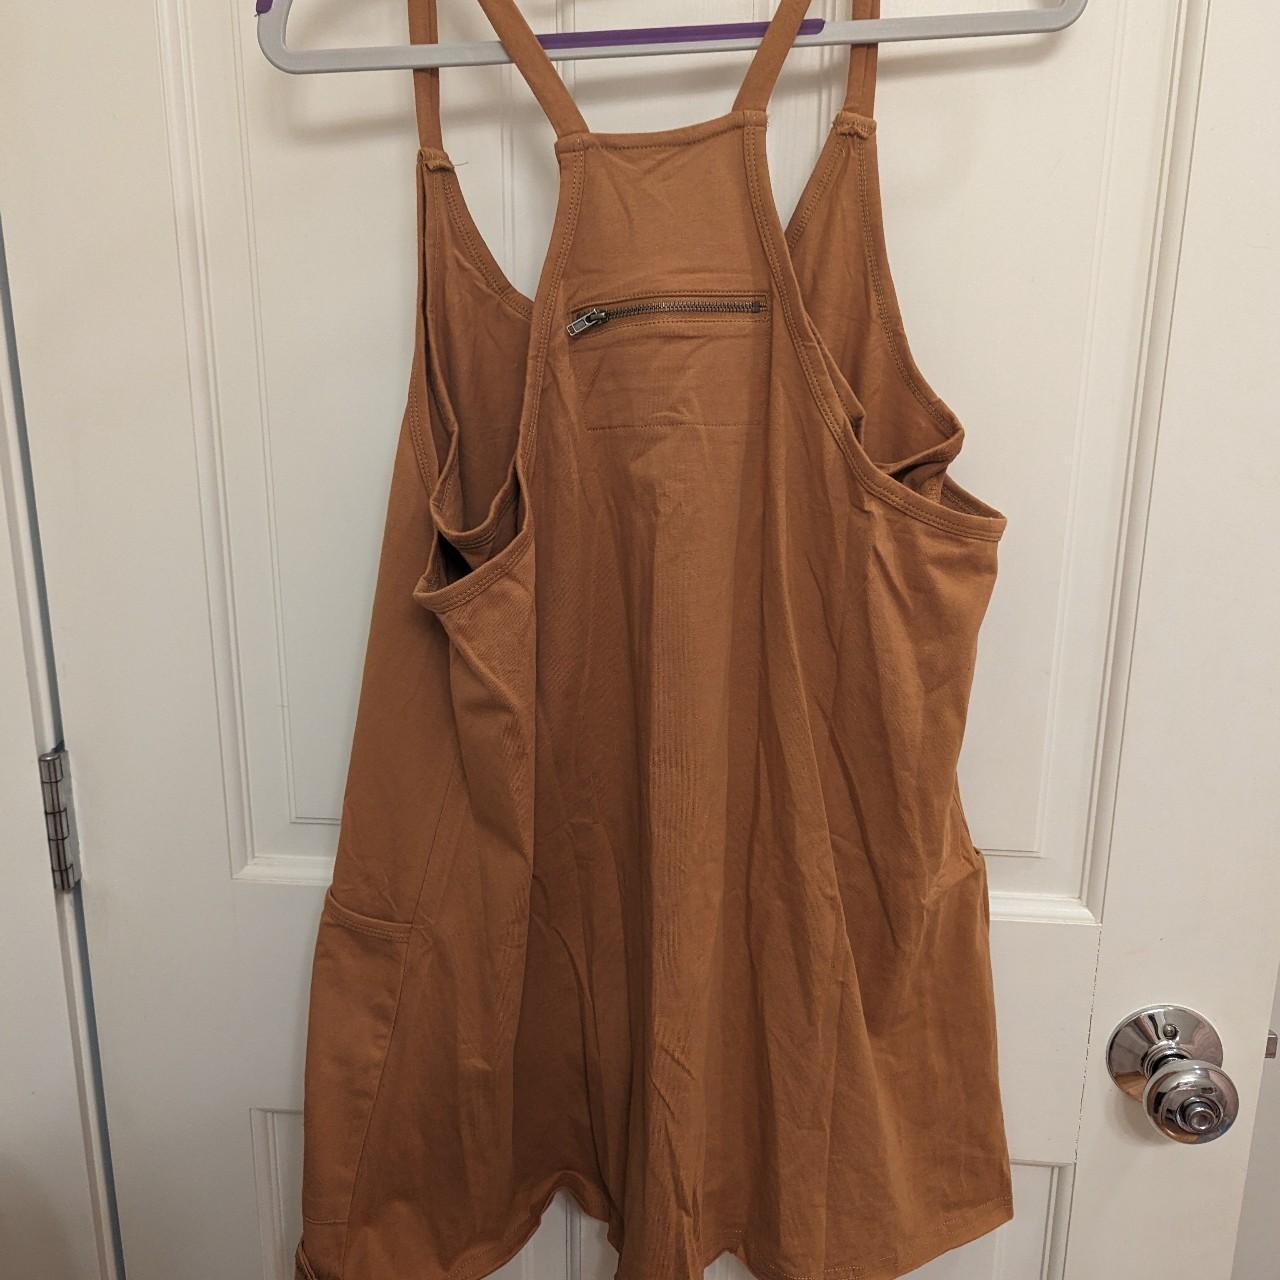 Free People Women's Brown and Tan Dress (2)